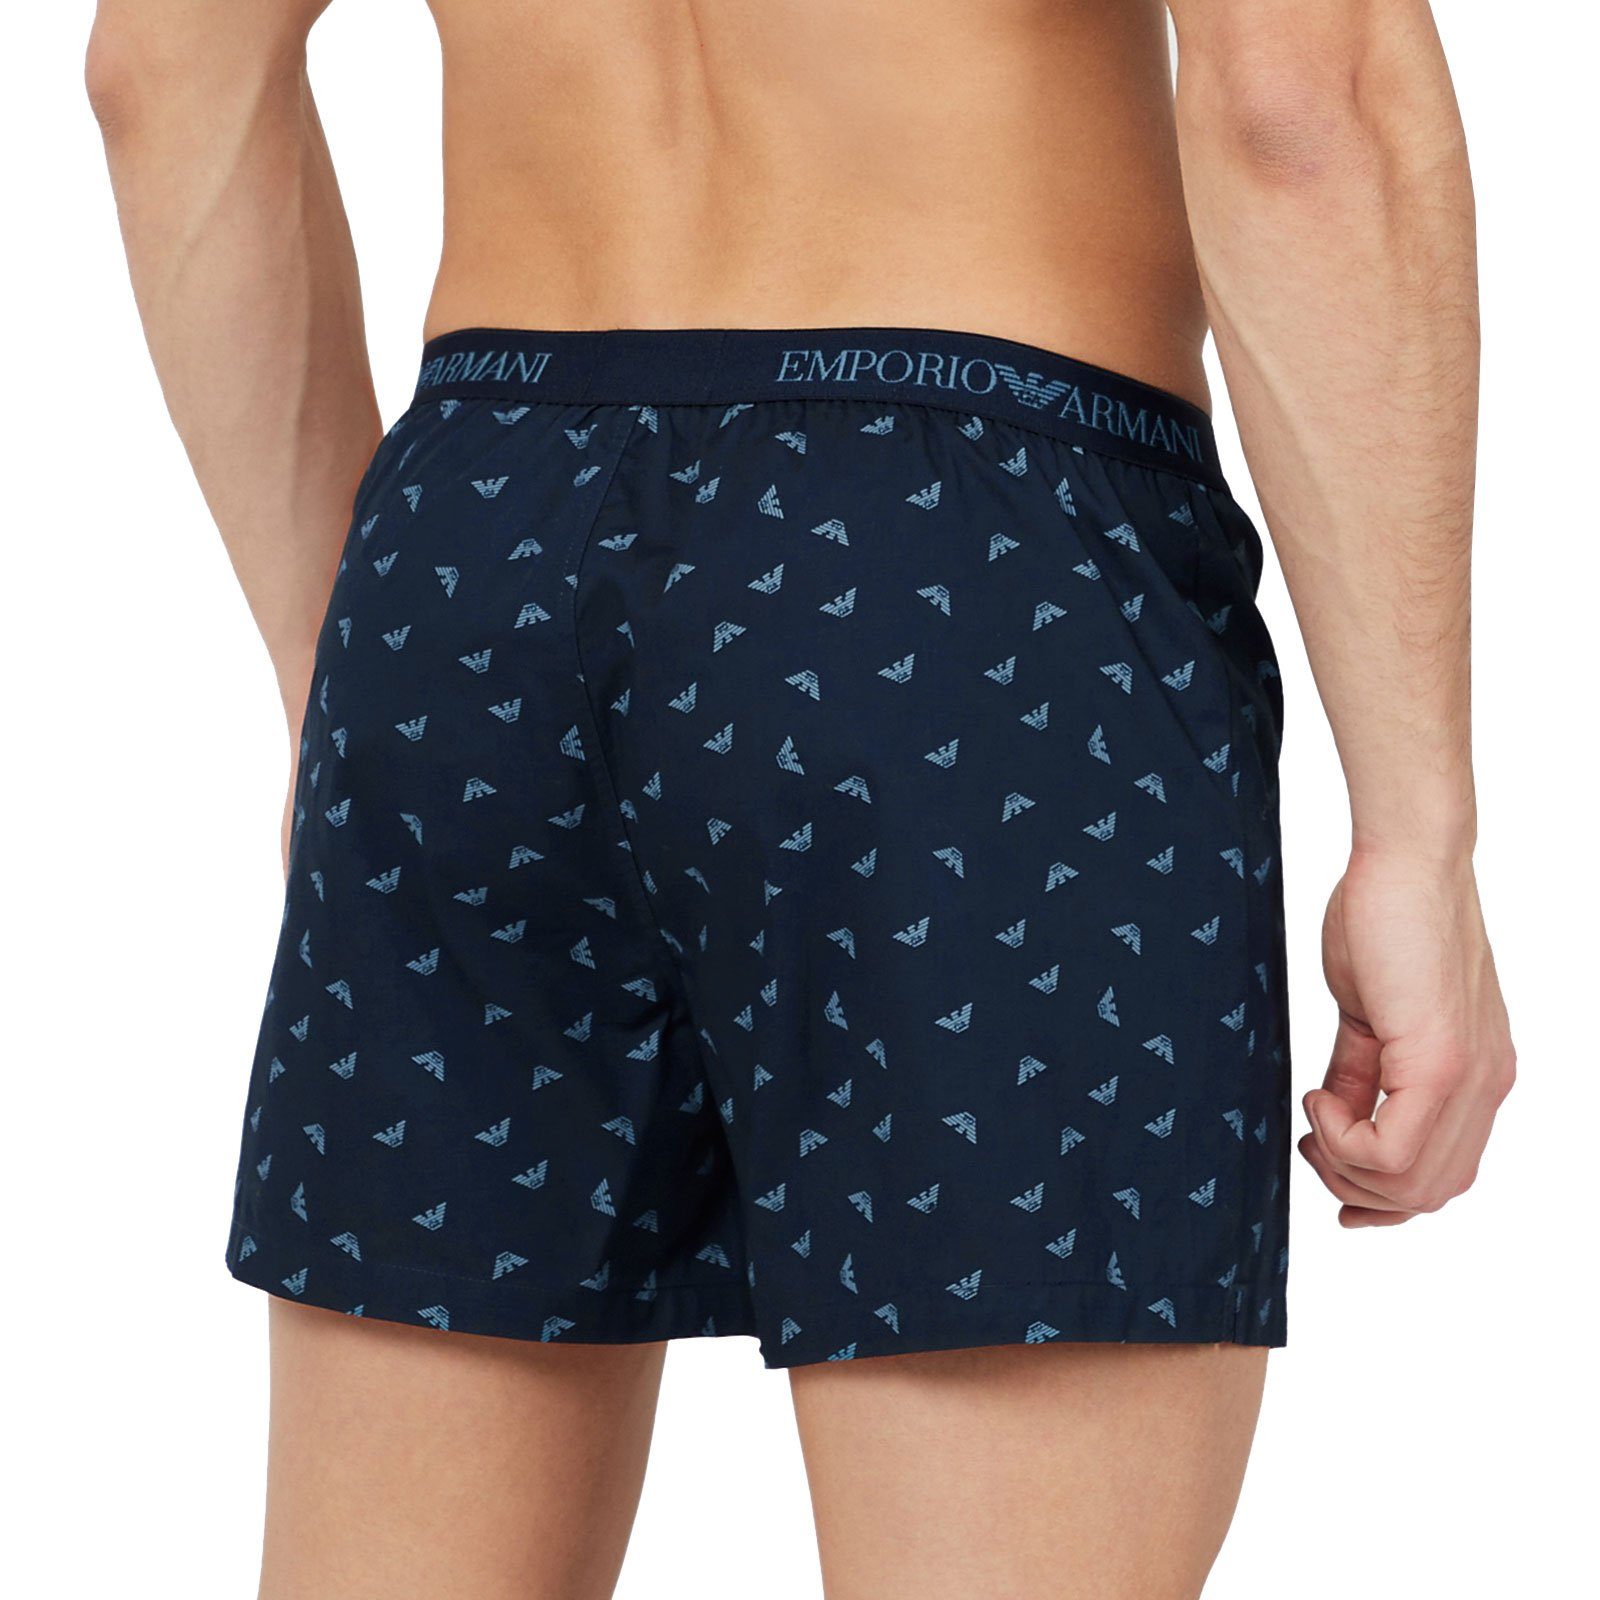 Emporio Armani Loungewear Boxershorts kleinen aus Muster Boxer (1-St) Markenlogos mit